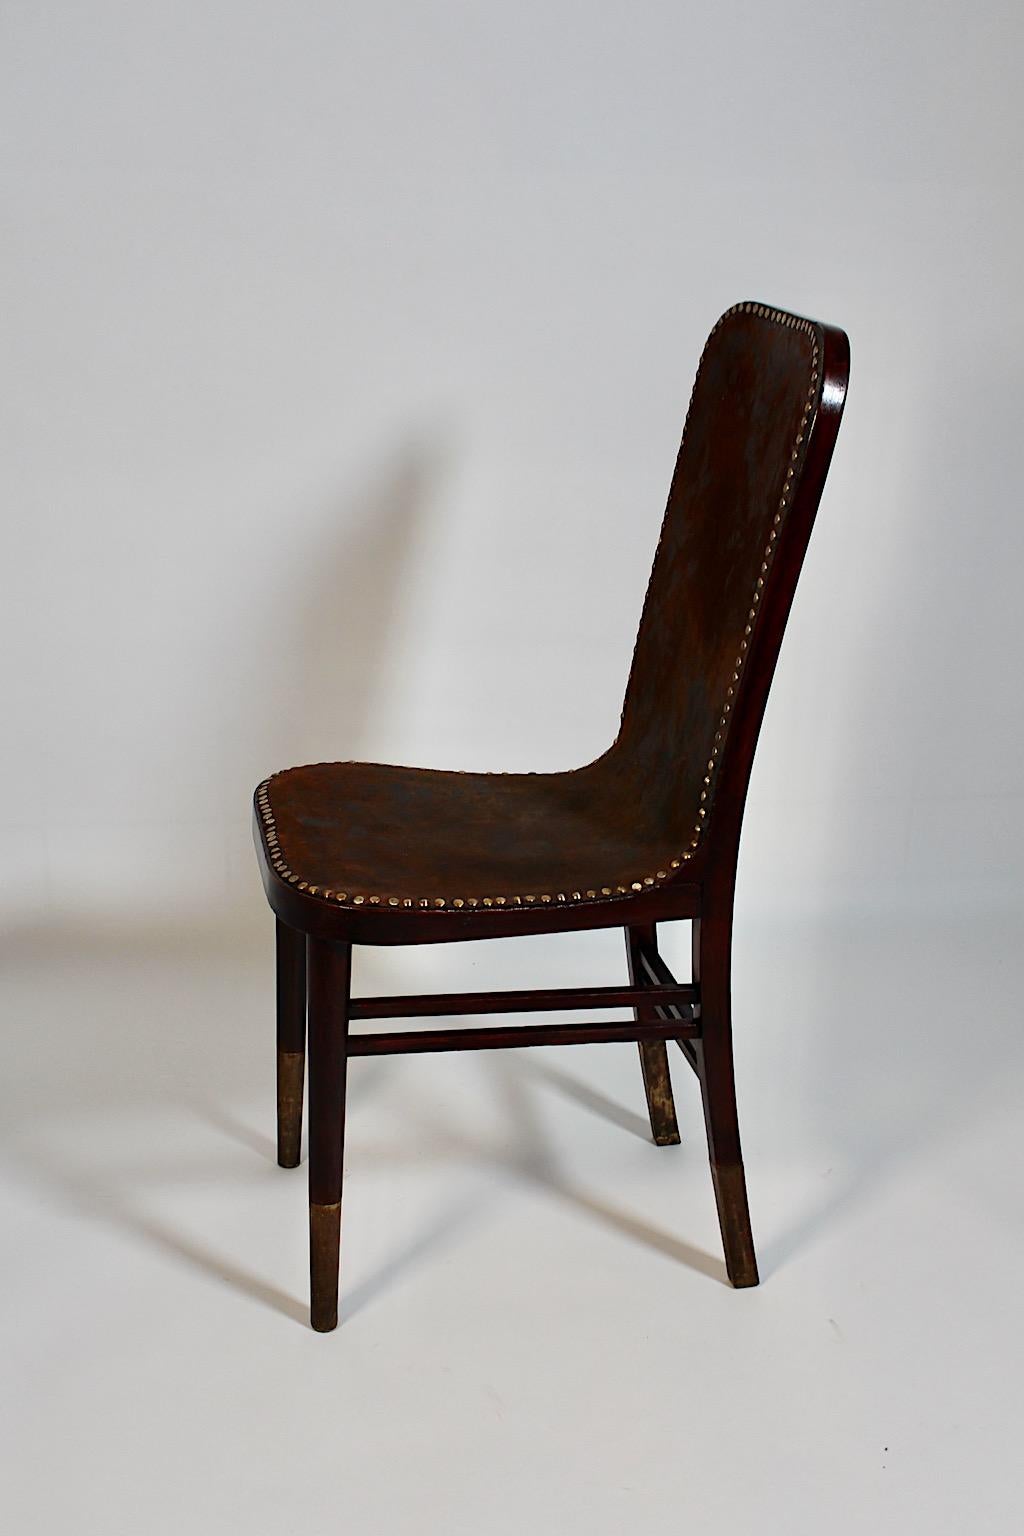 Jugendstil Side Chair Beech Leather by Joseph Urban Gebrüder Thonet 1903 Vienna For Sale 5